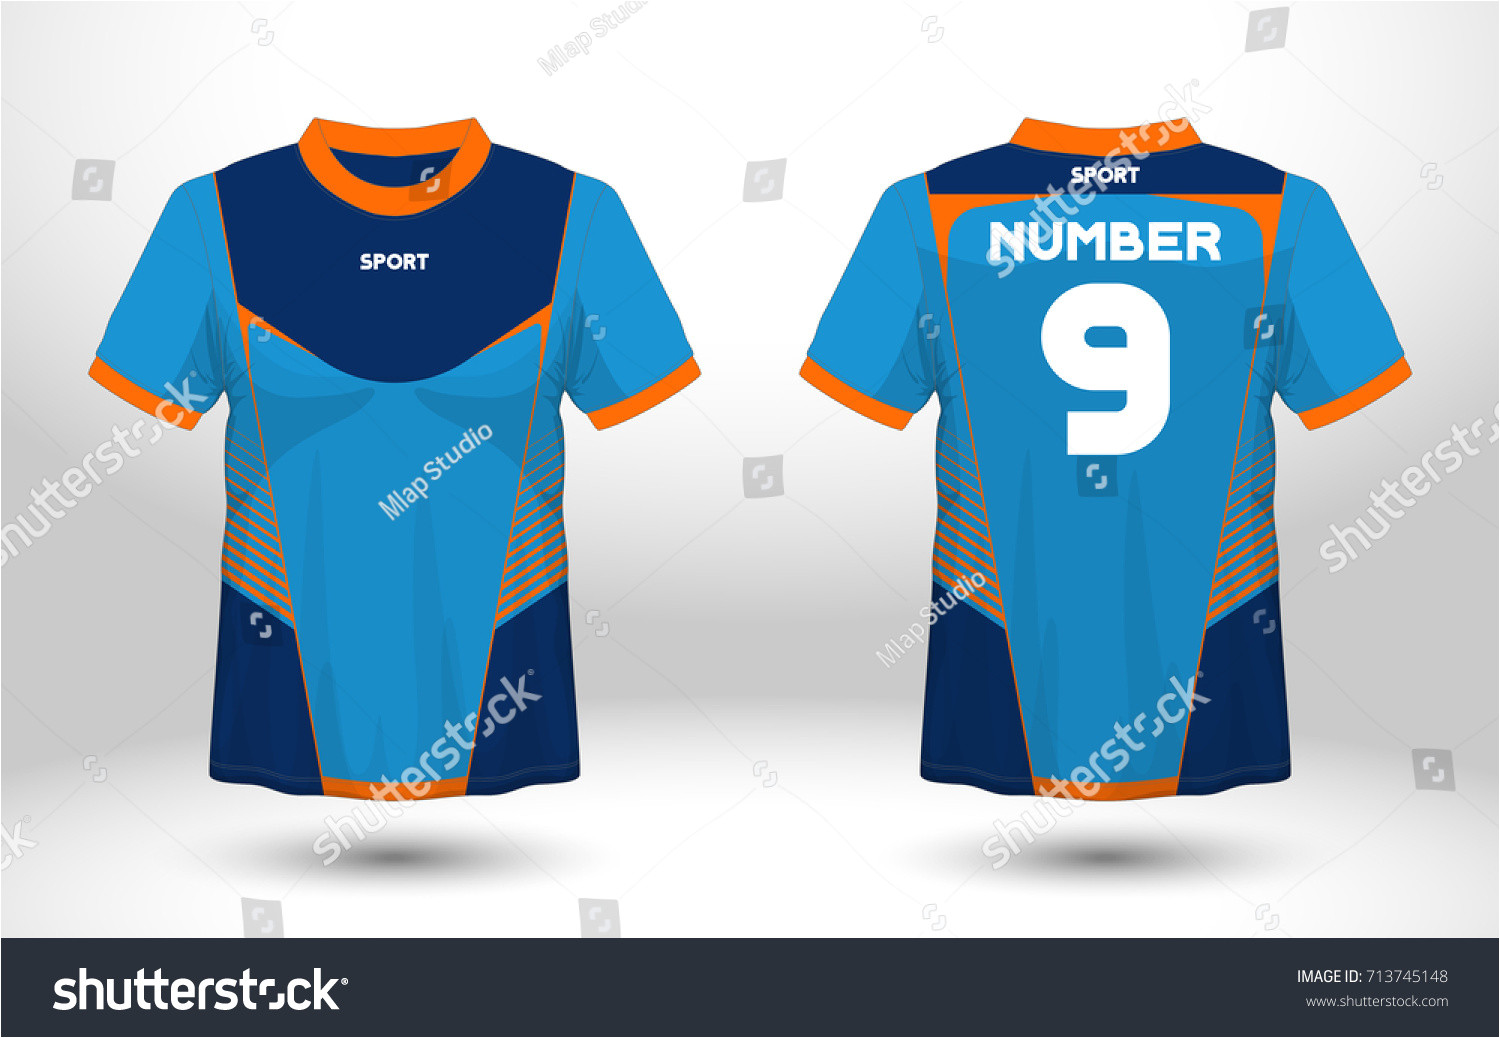 blue layout football sport tshirt design 713745148